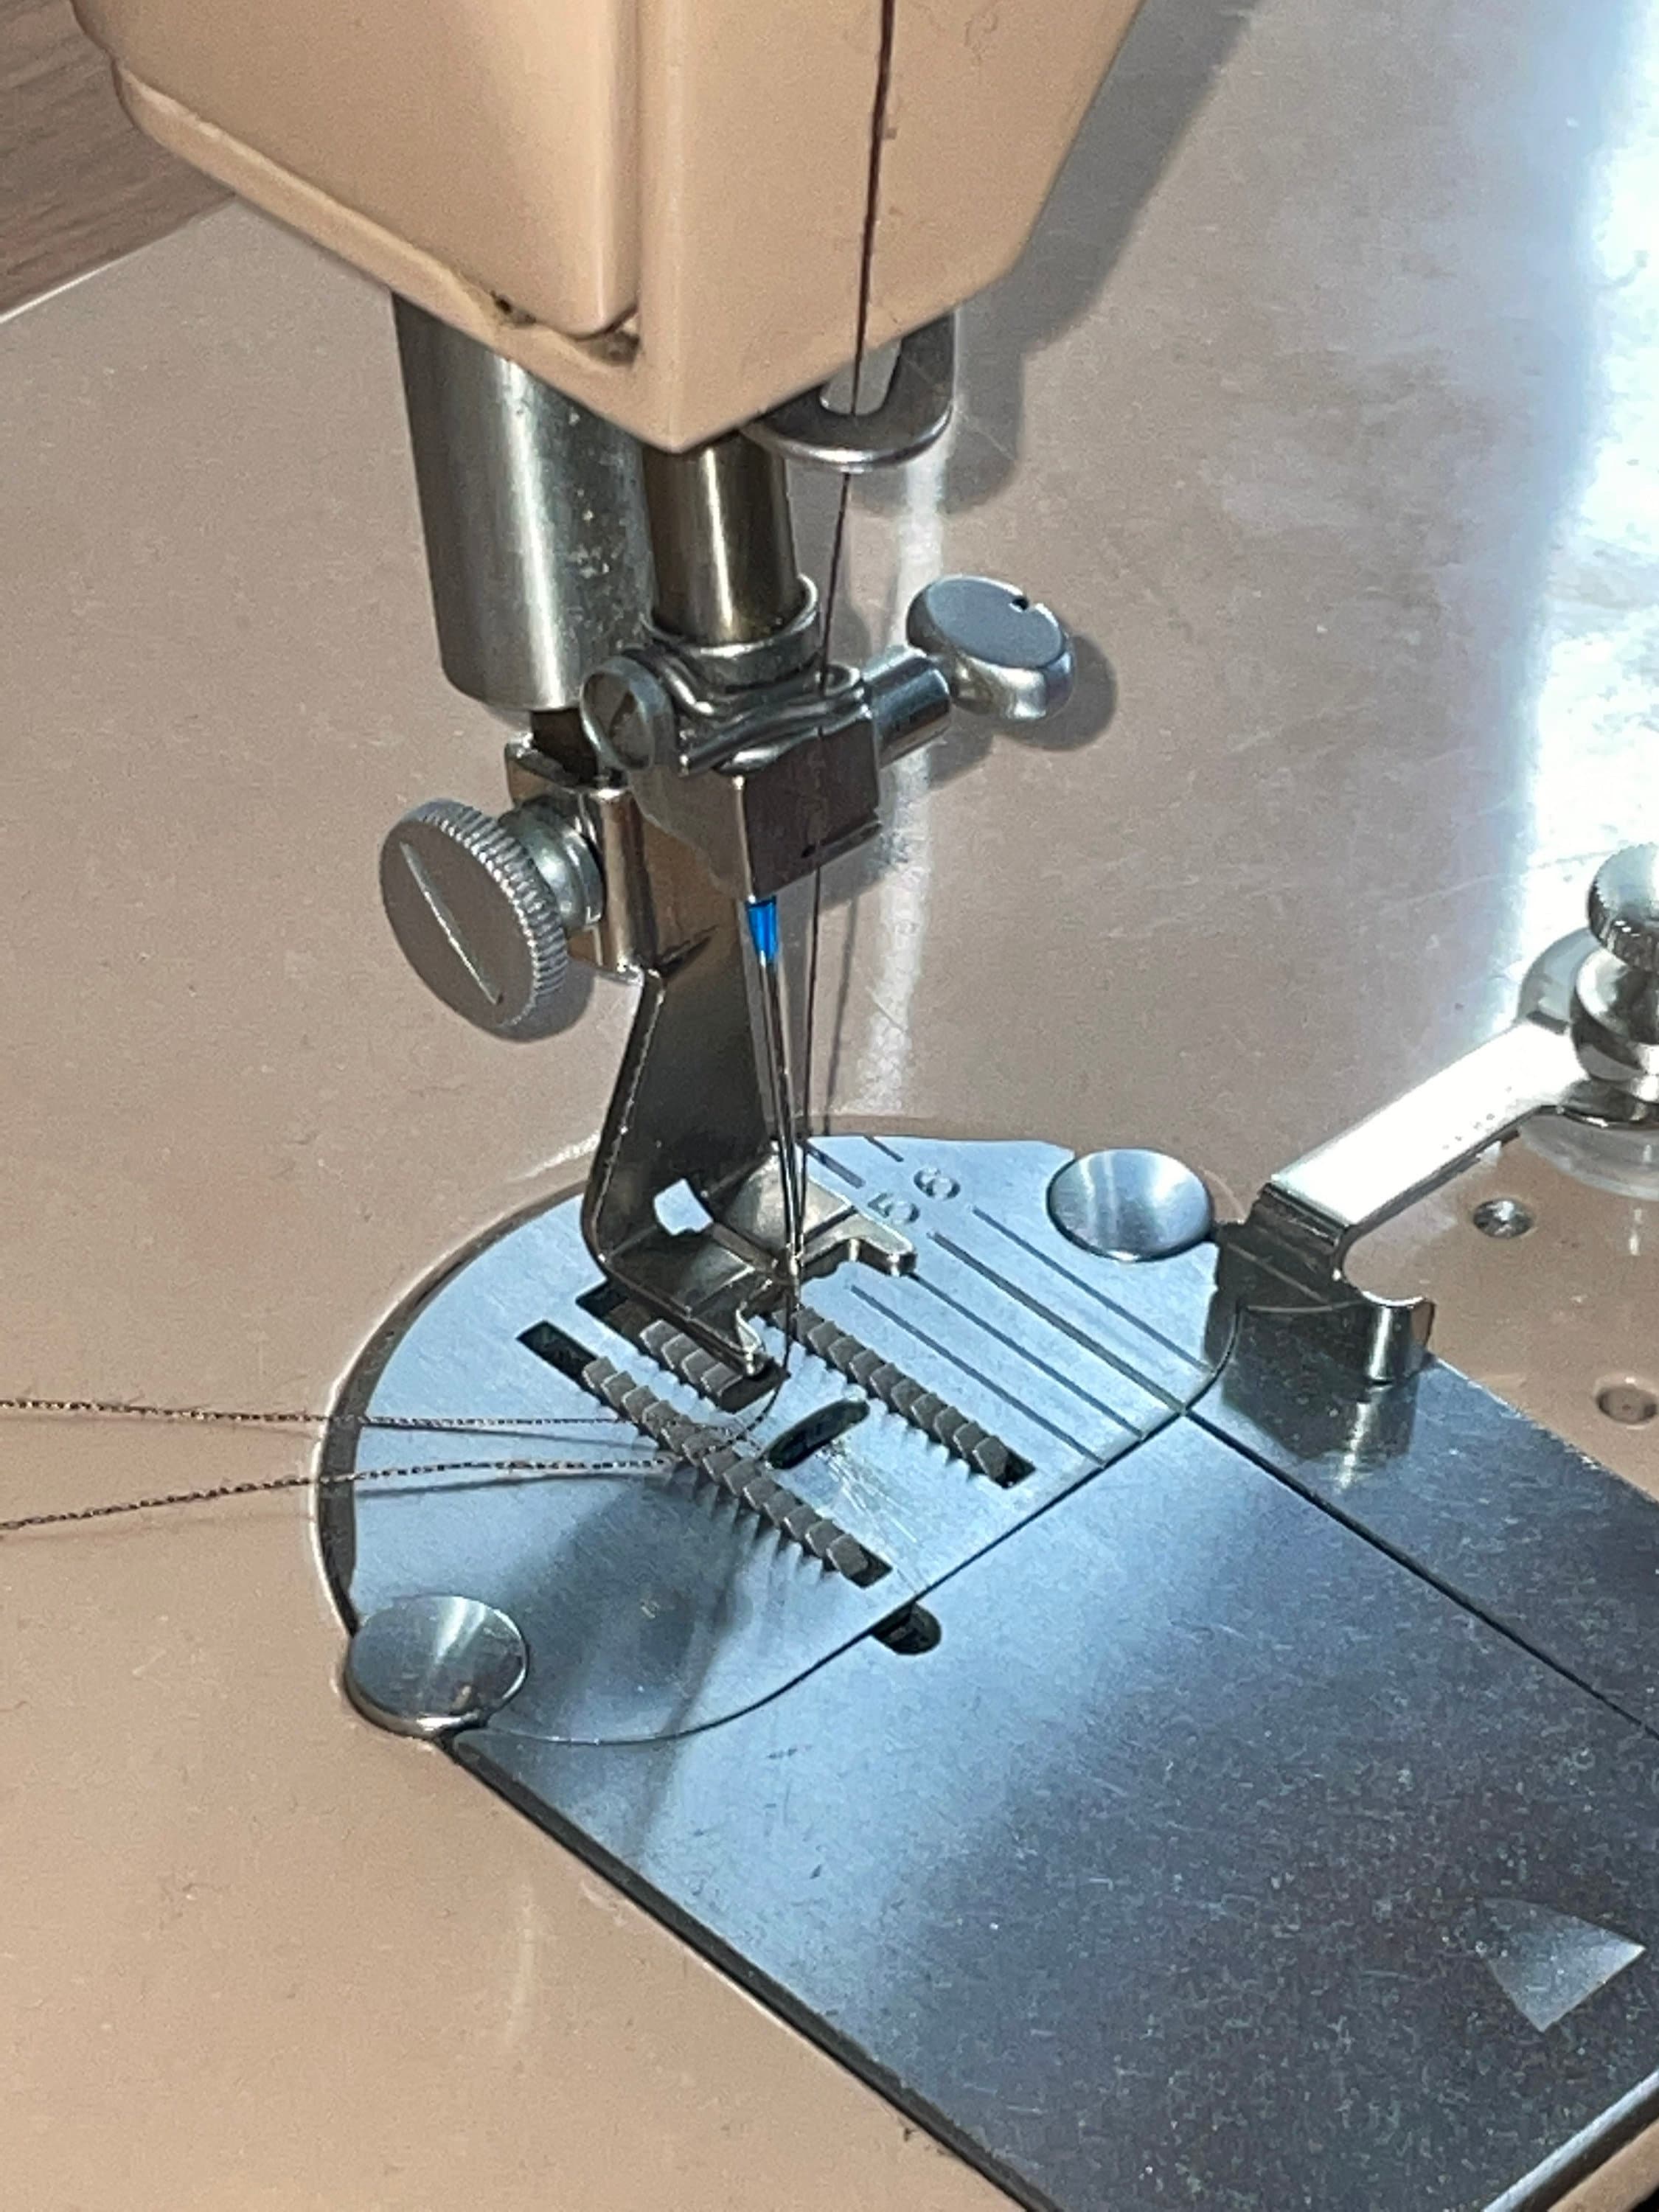 Singer Slant Shank Sewing Machine Special Purpose Foot Zigzag Satin Stitch  Applique Button Simanco 161167